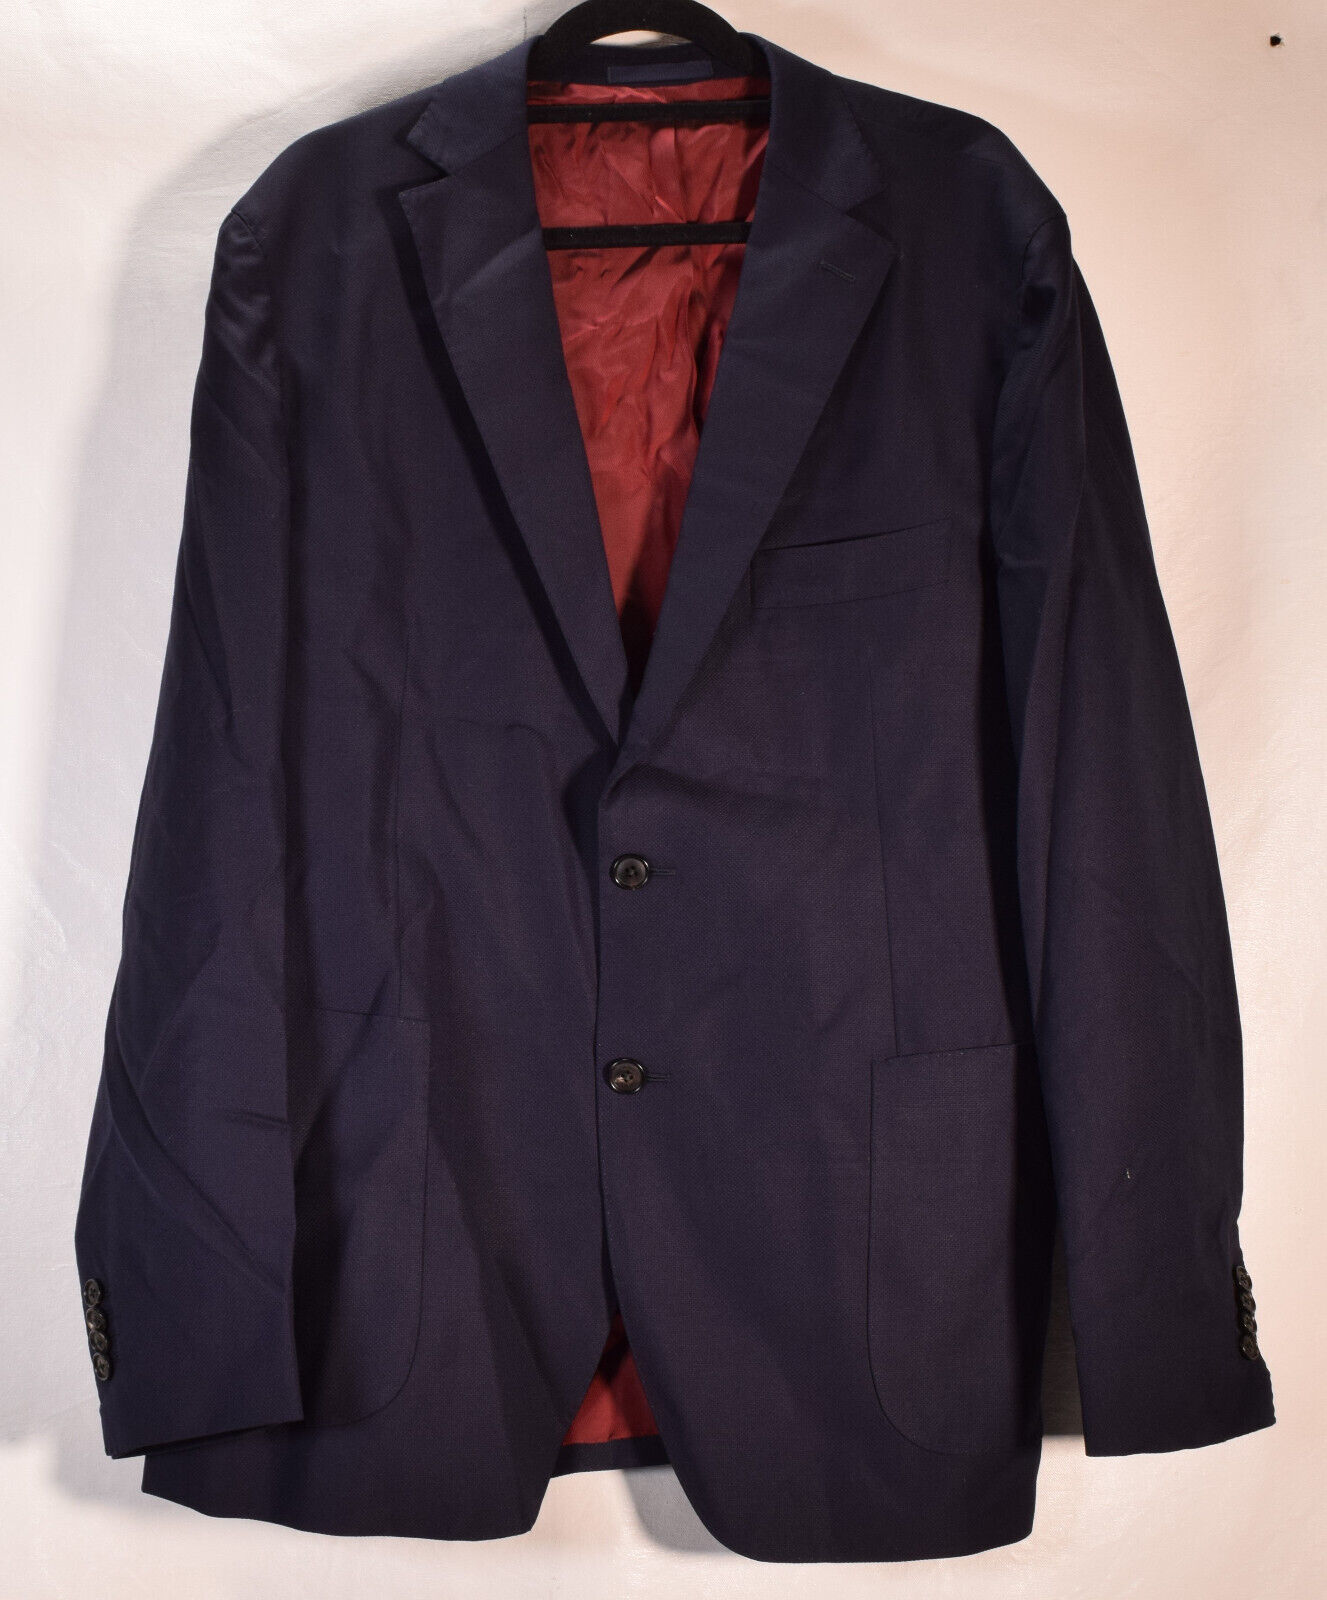 Primary image for M.J. Bale Mens Suit Blazer Drop 8 Fit Navy 46